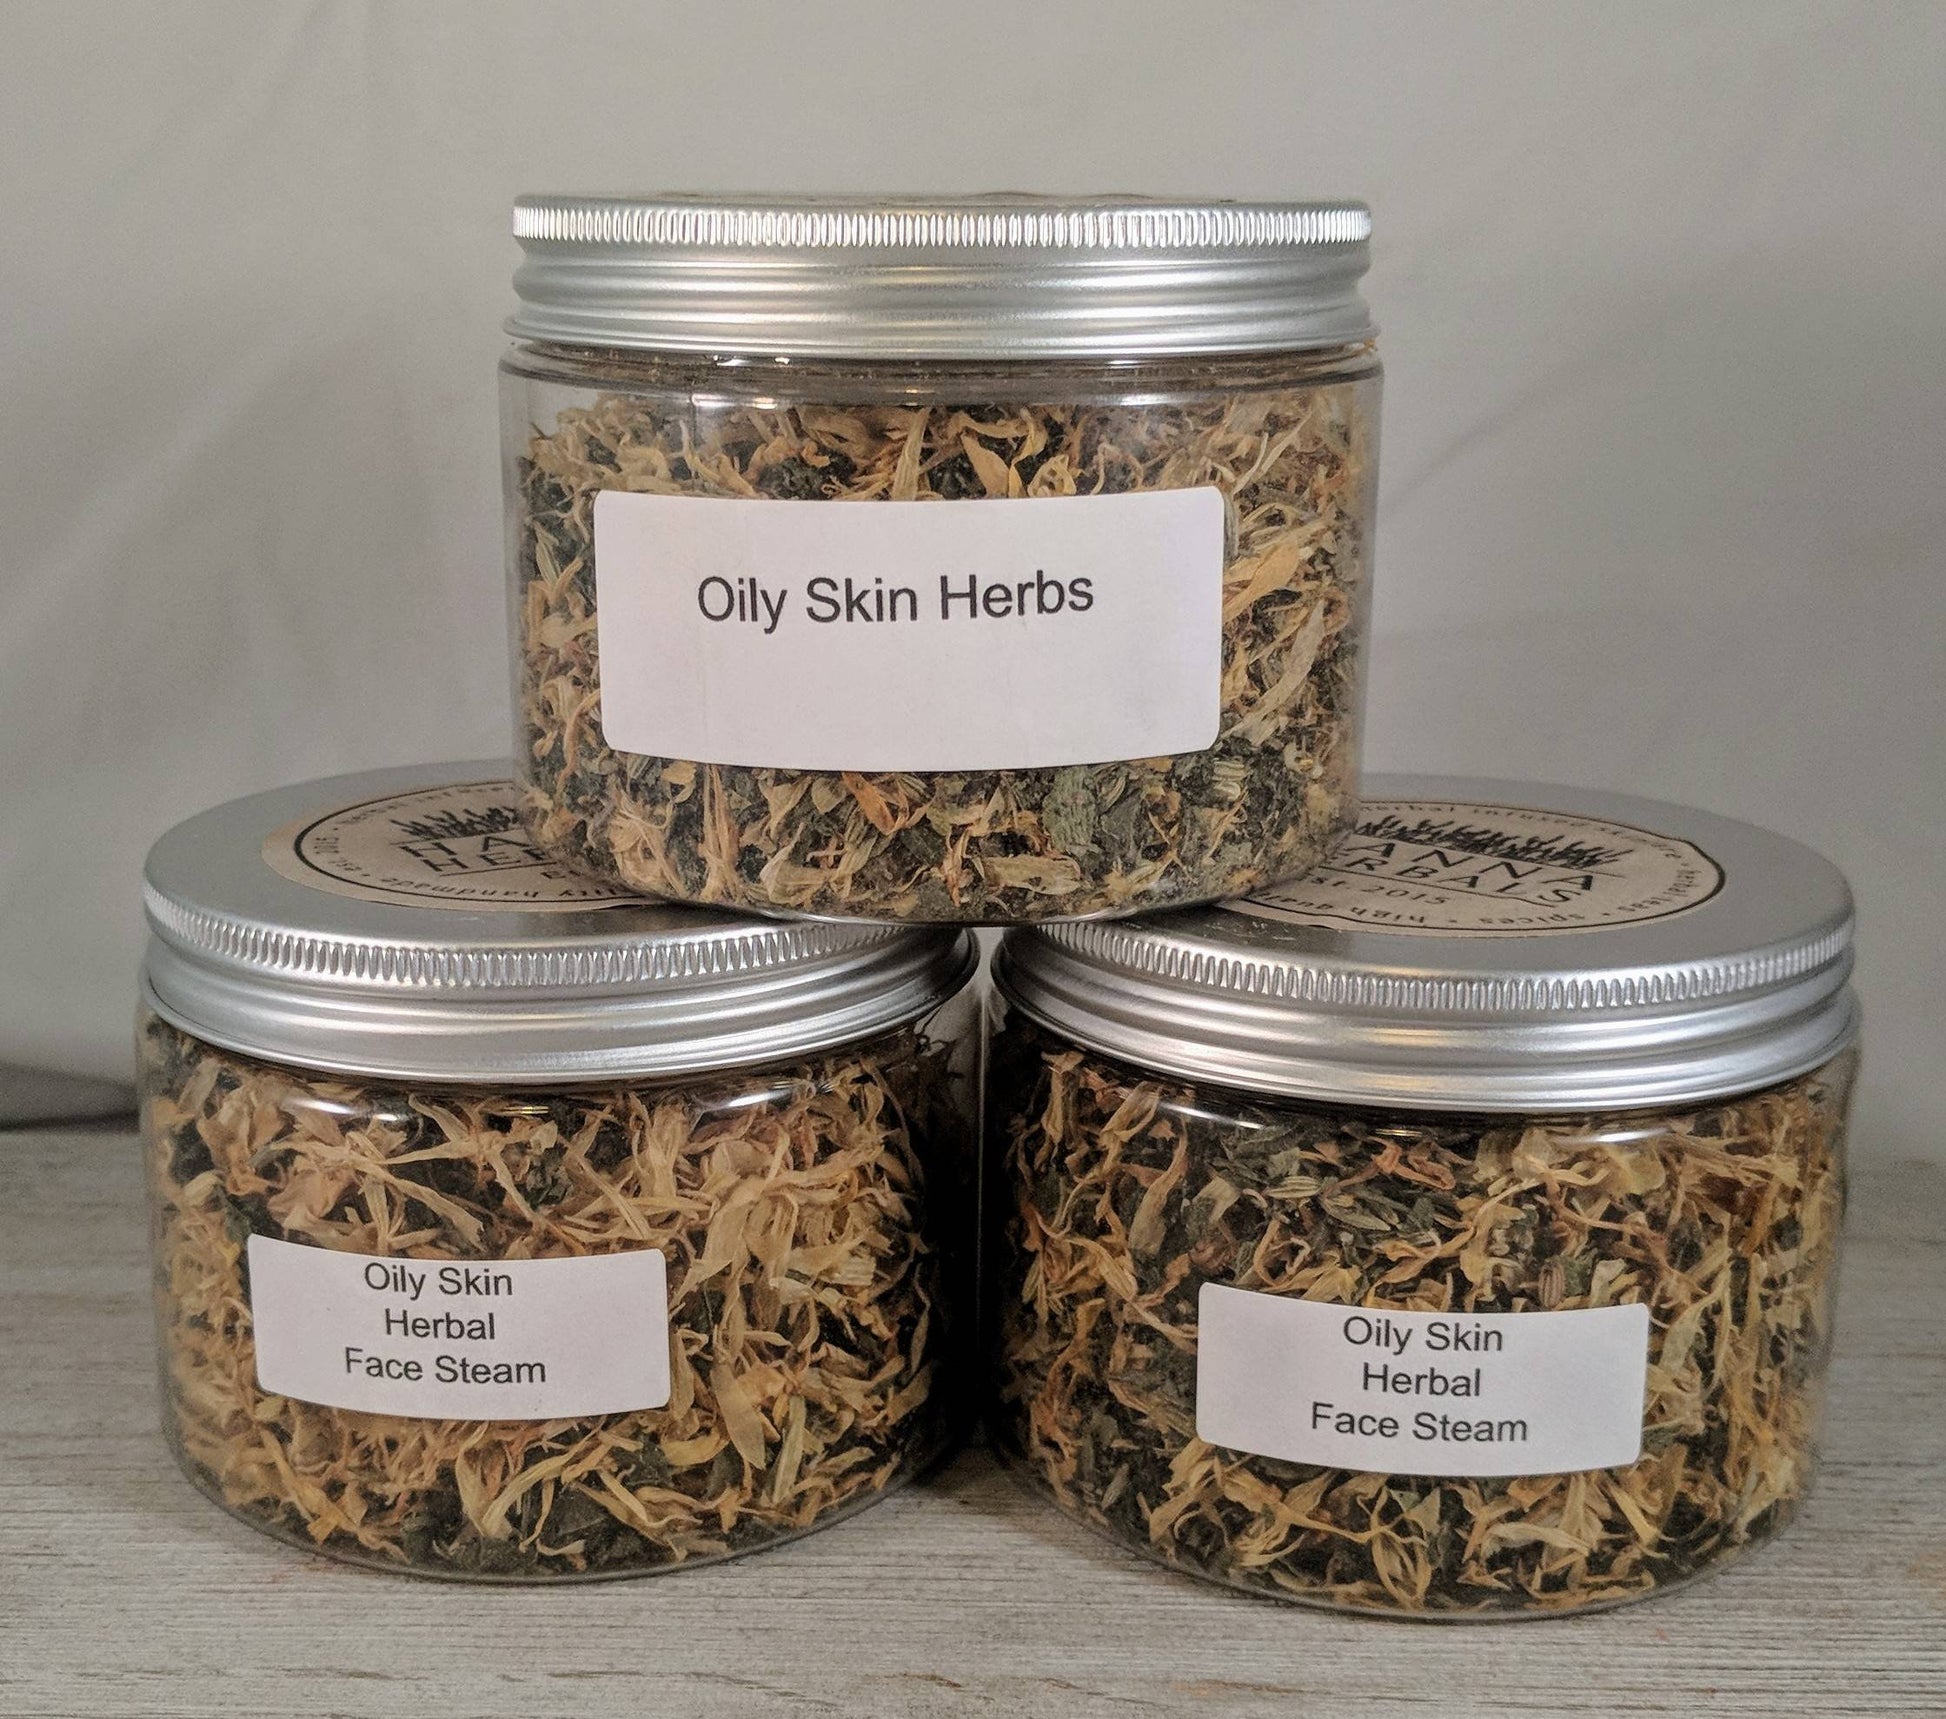 Oily skin herbal facial steam - Hanna Herbals